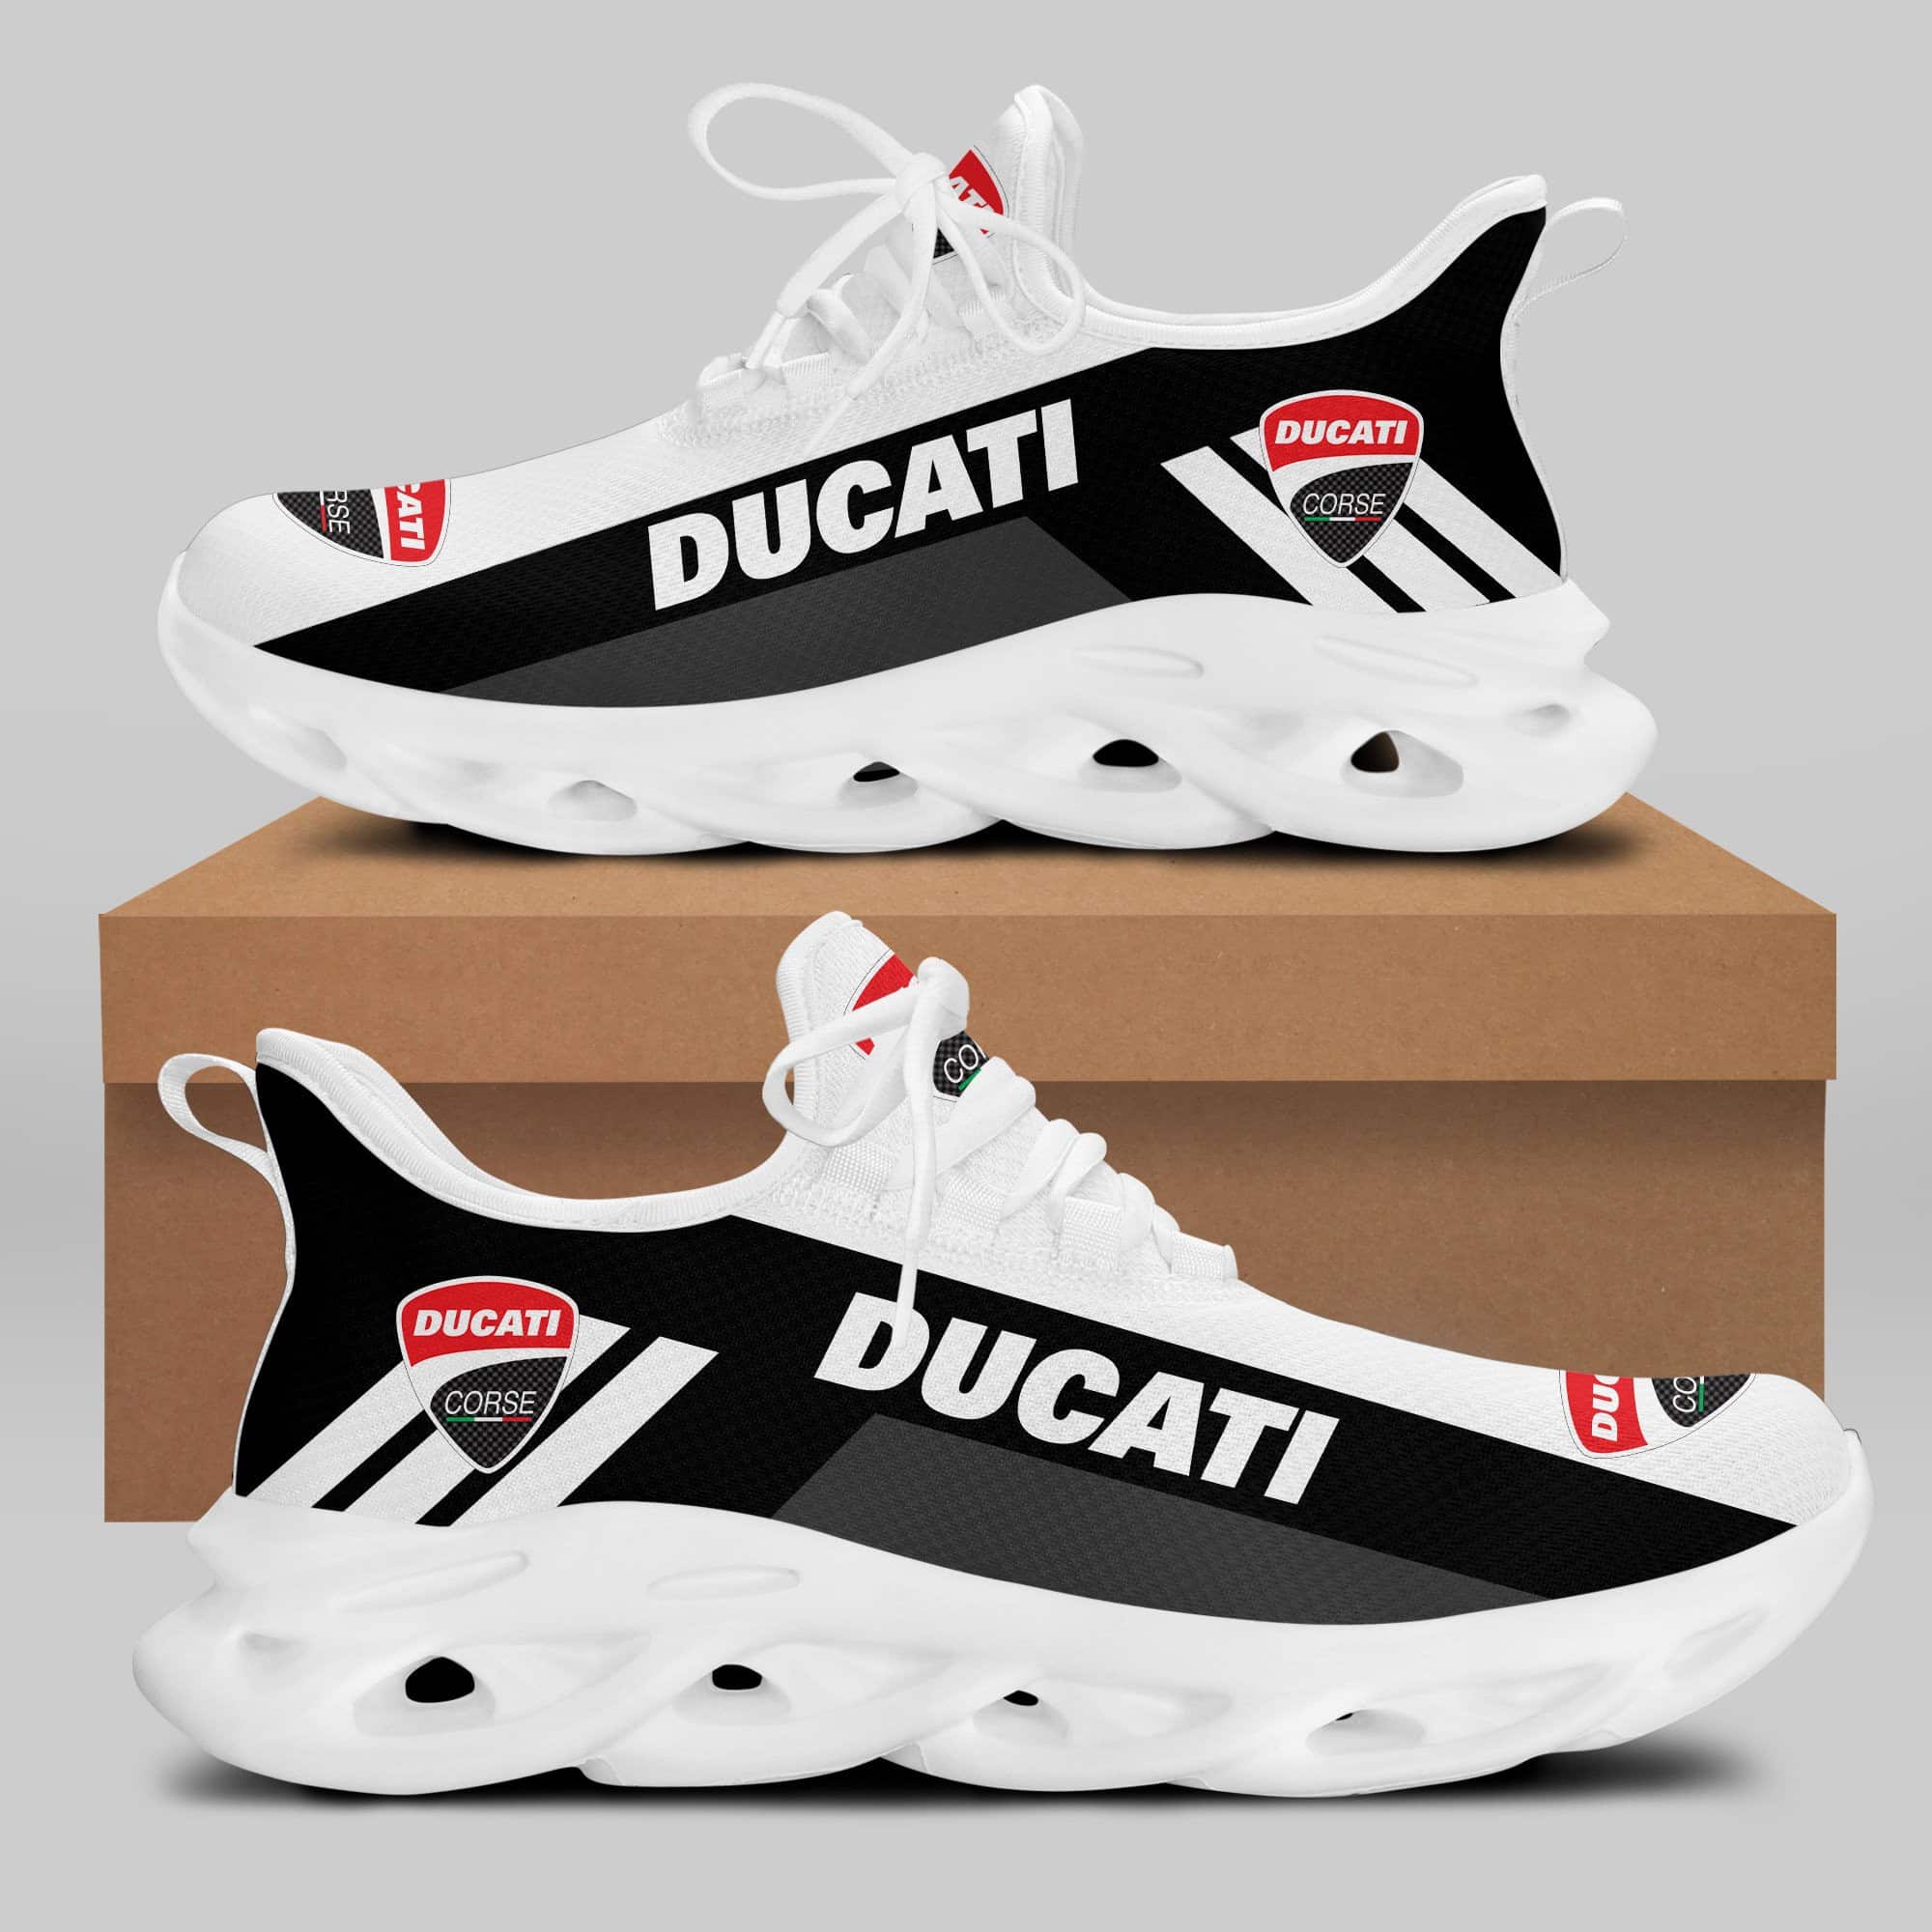 Ducati Racing Running Shoes Max Soul Shoes Sneakers Ver 40 1